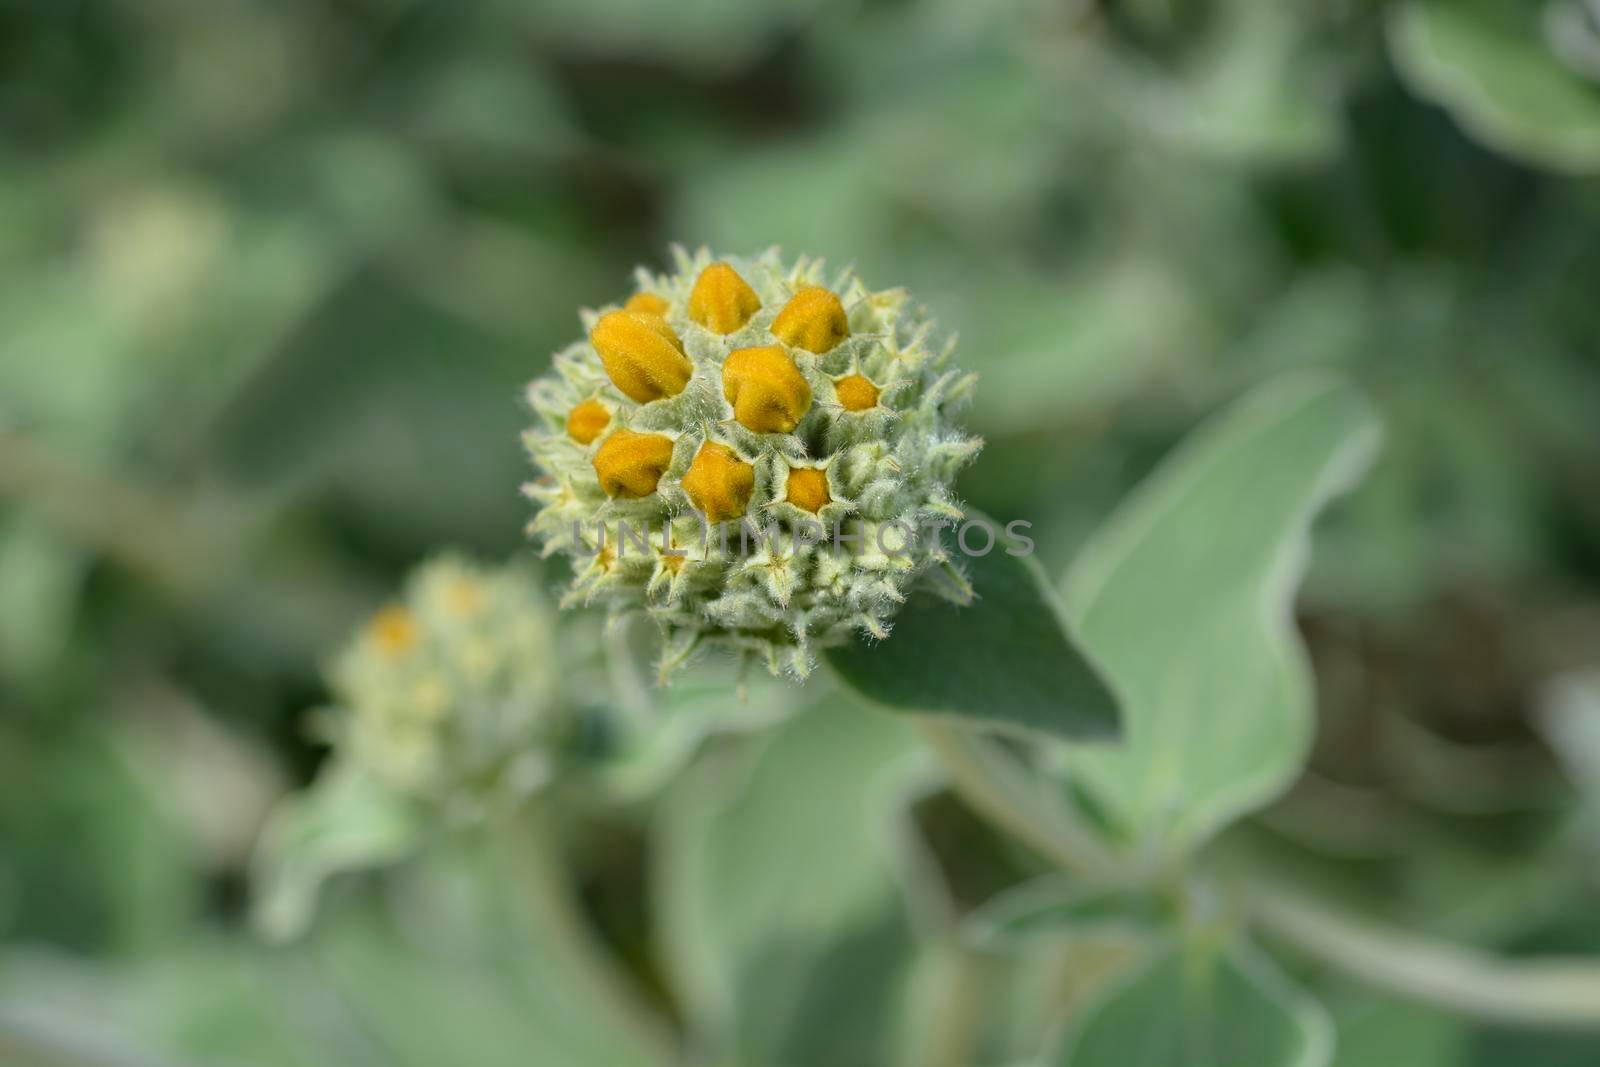 Jerusalem sage yellow flower bud - Latin name - Phlomis fruticosa